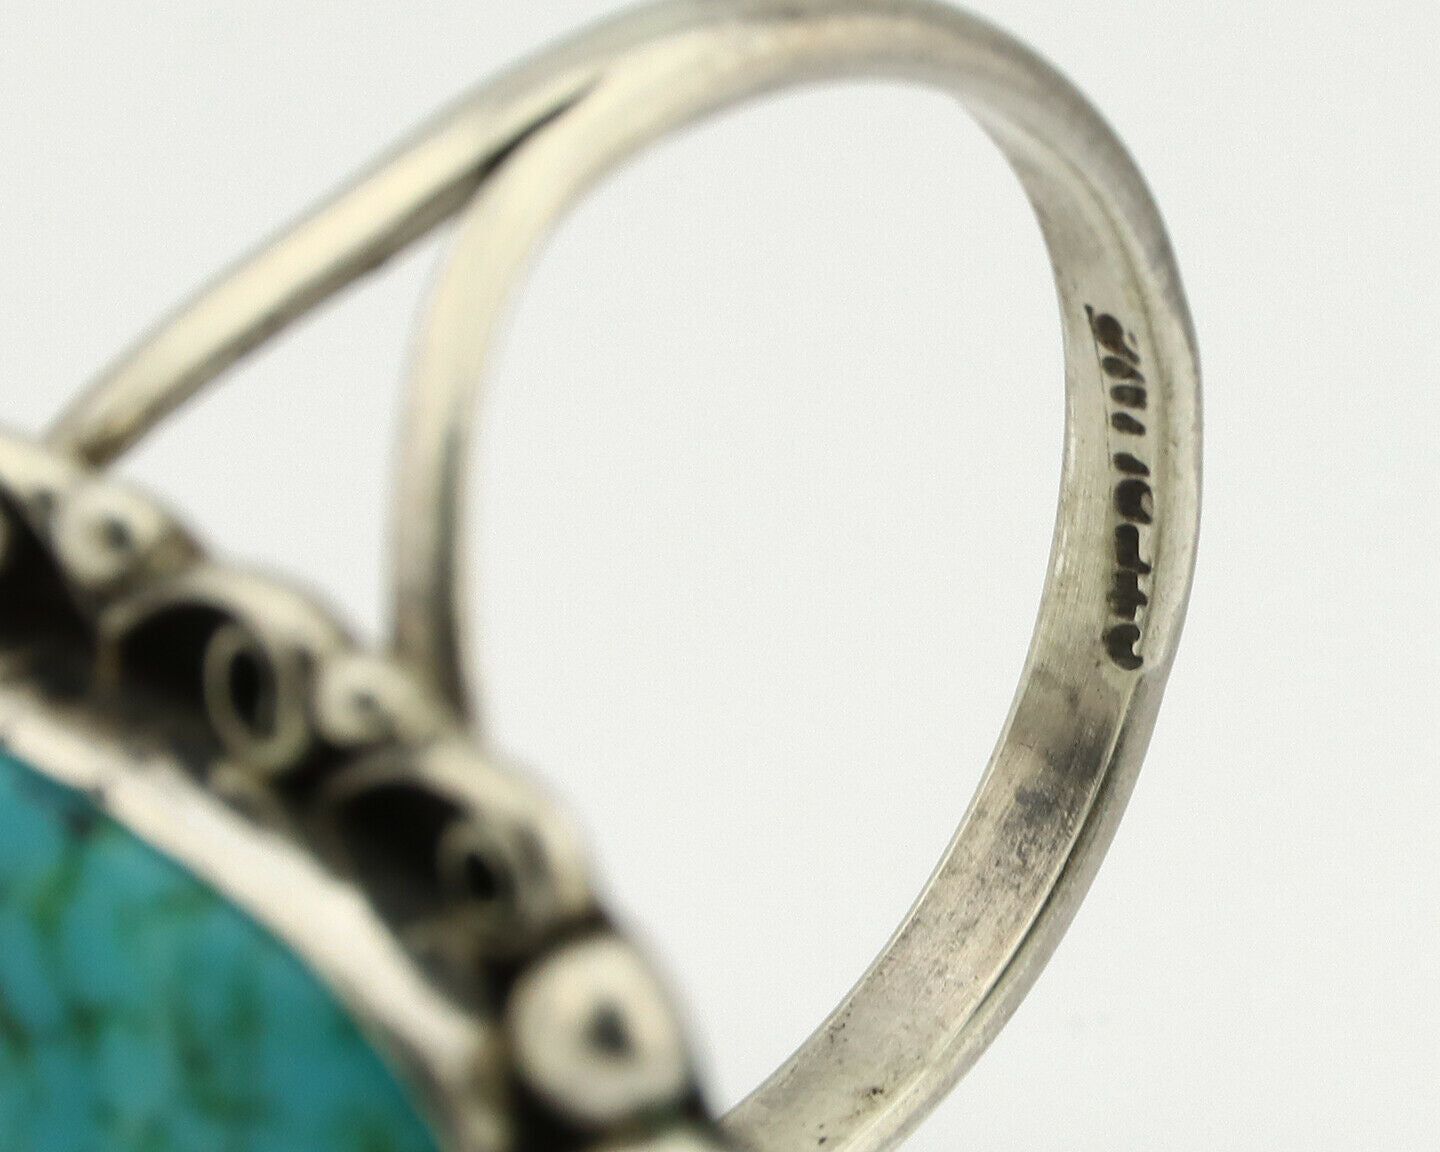 Navajo Ring .925 Silver Spiderweb Turquoise Native American Artist C.80's